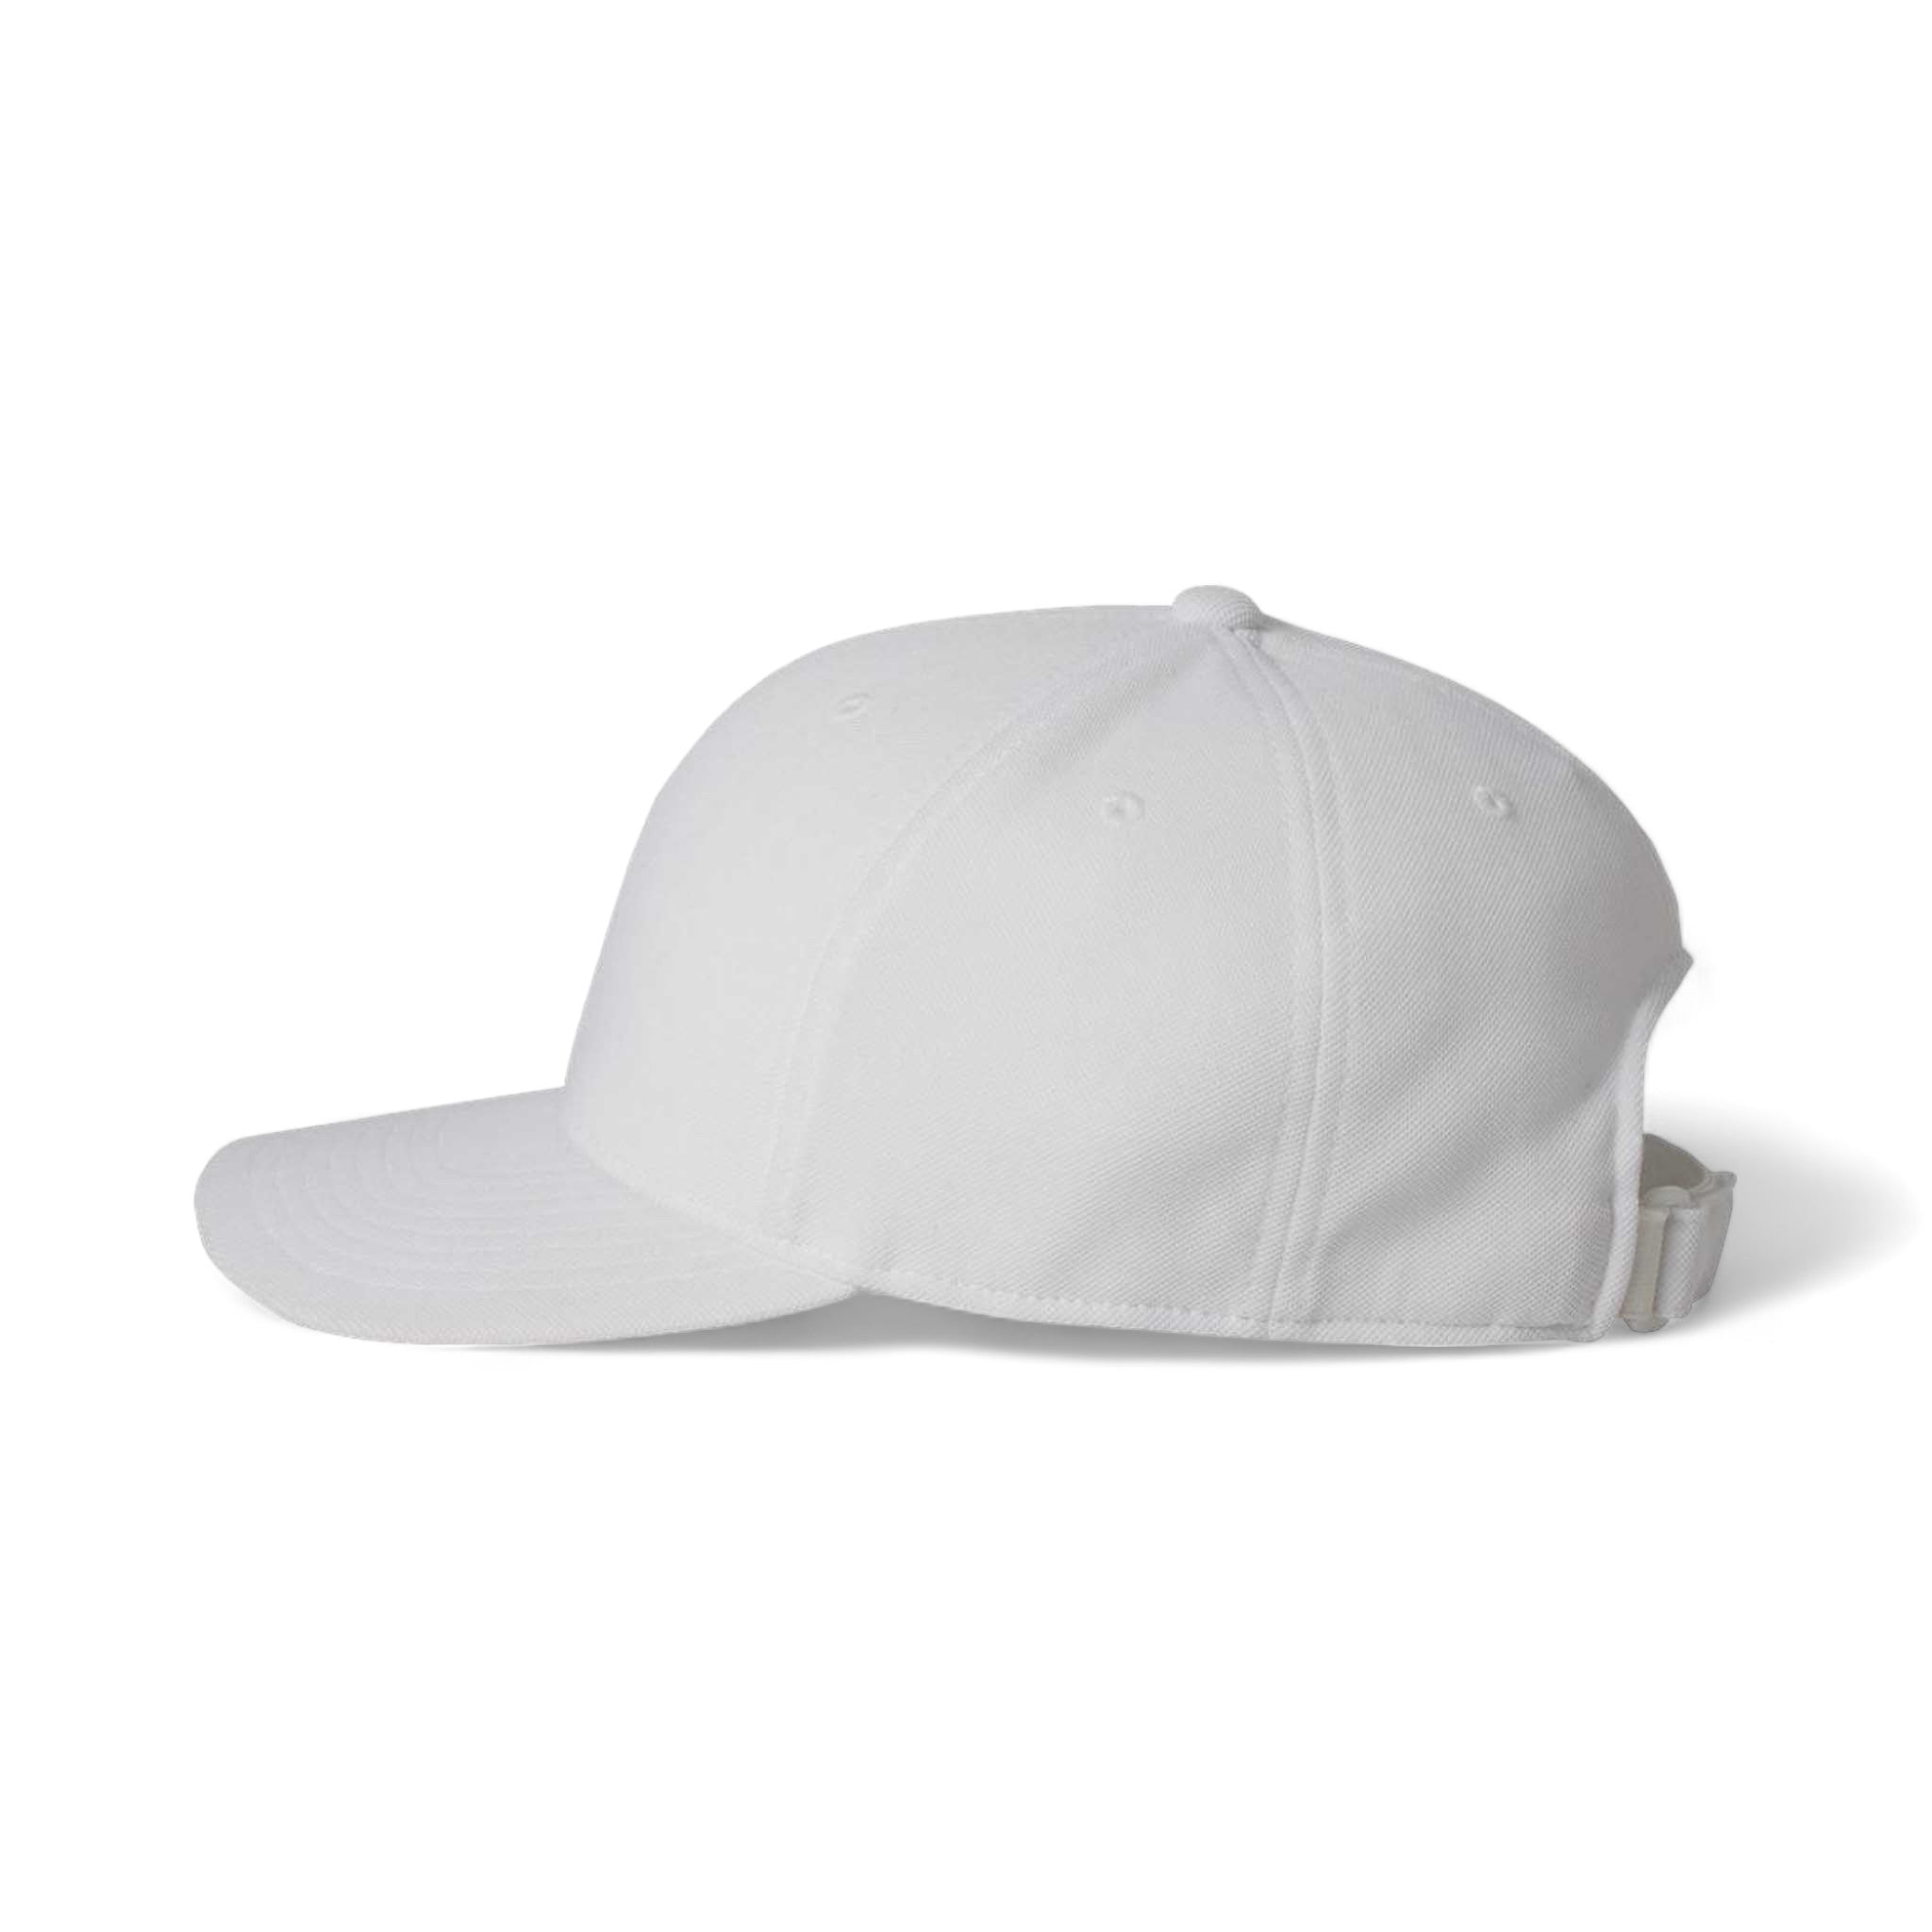 Side view of Flexfit 110P custom hat in white